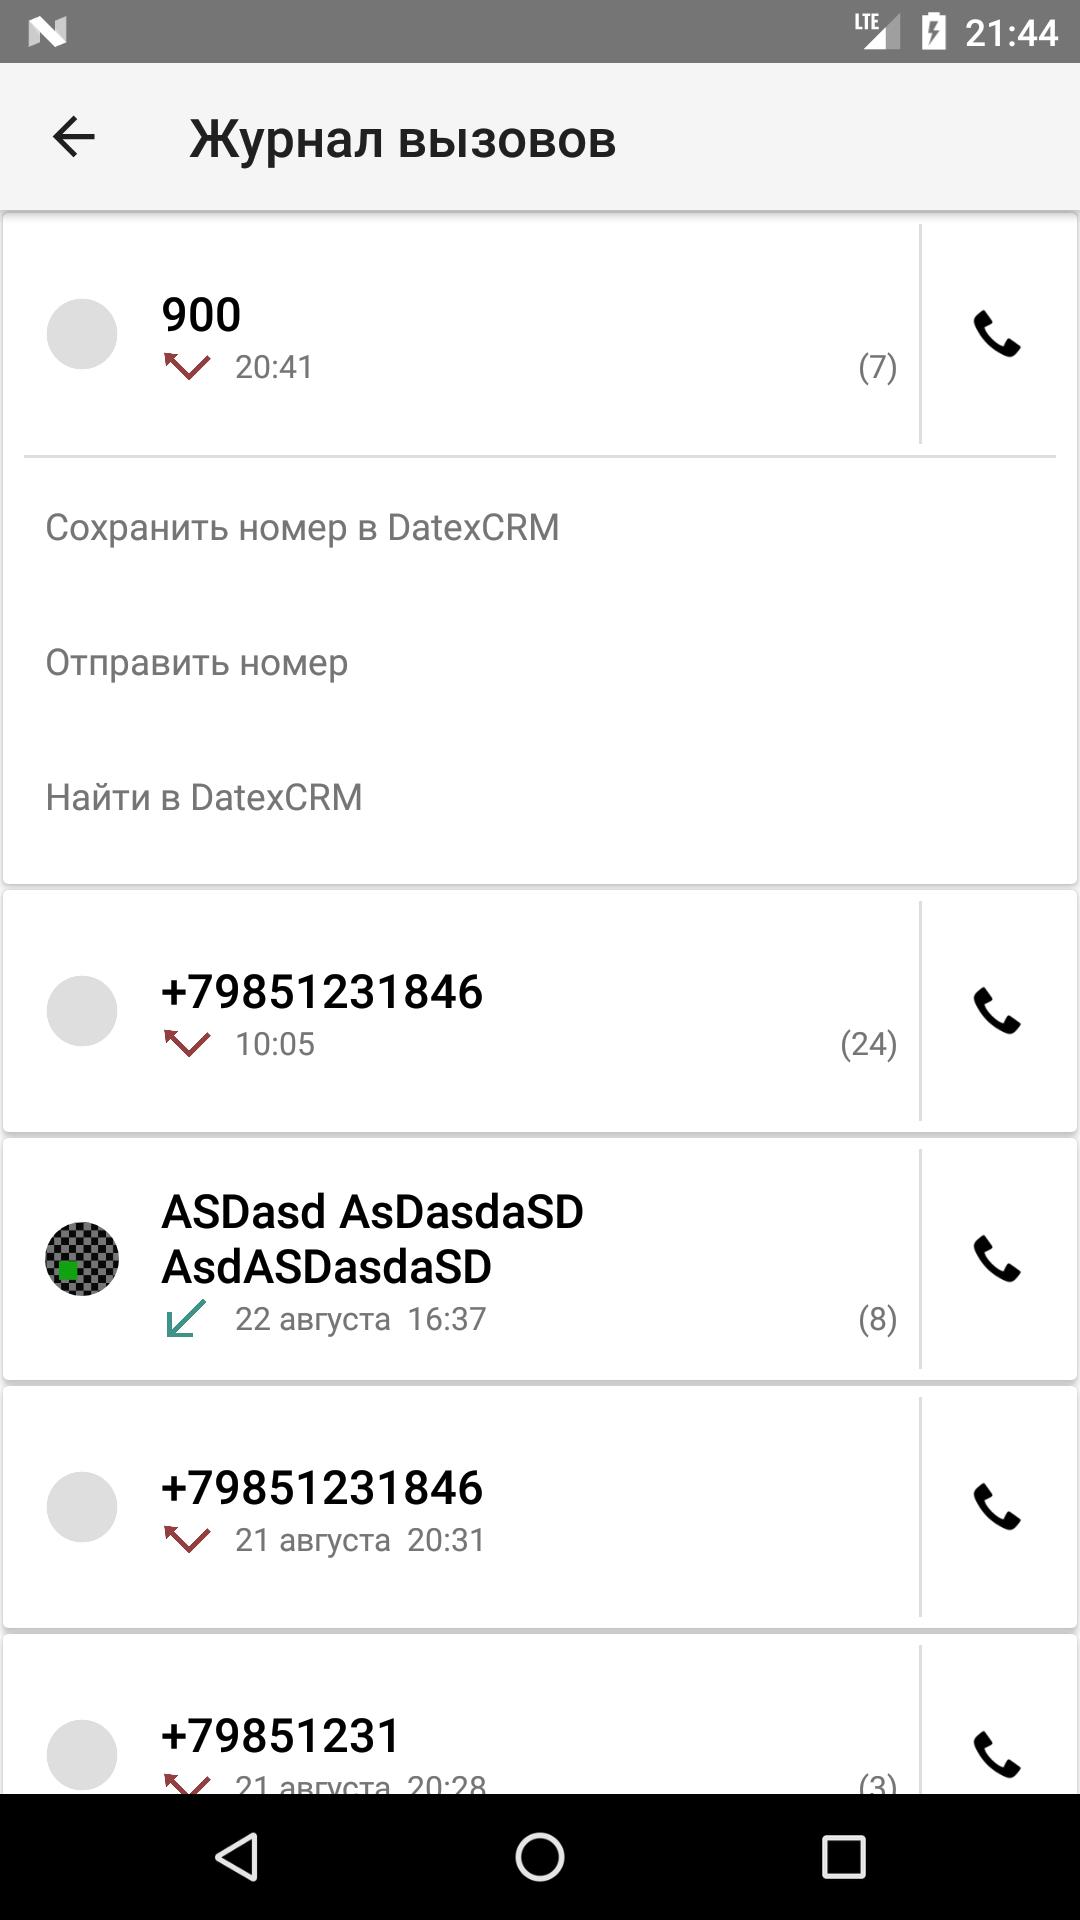 E Staff Caller Id For Android Apk Download - asdasdasdasd roblox